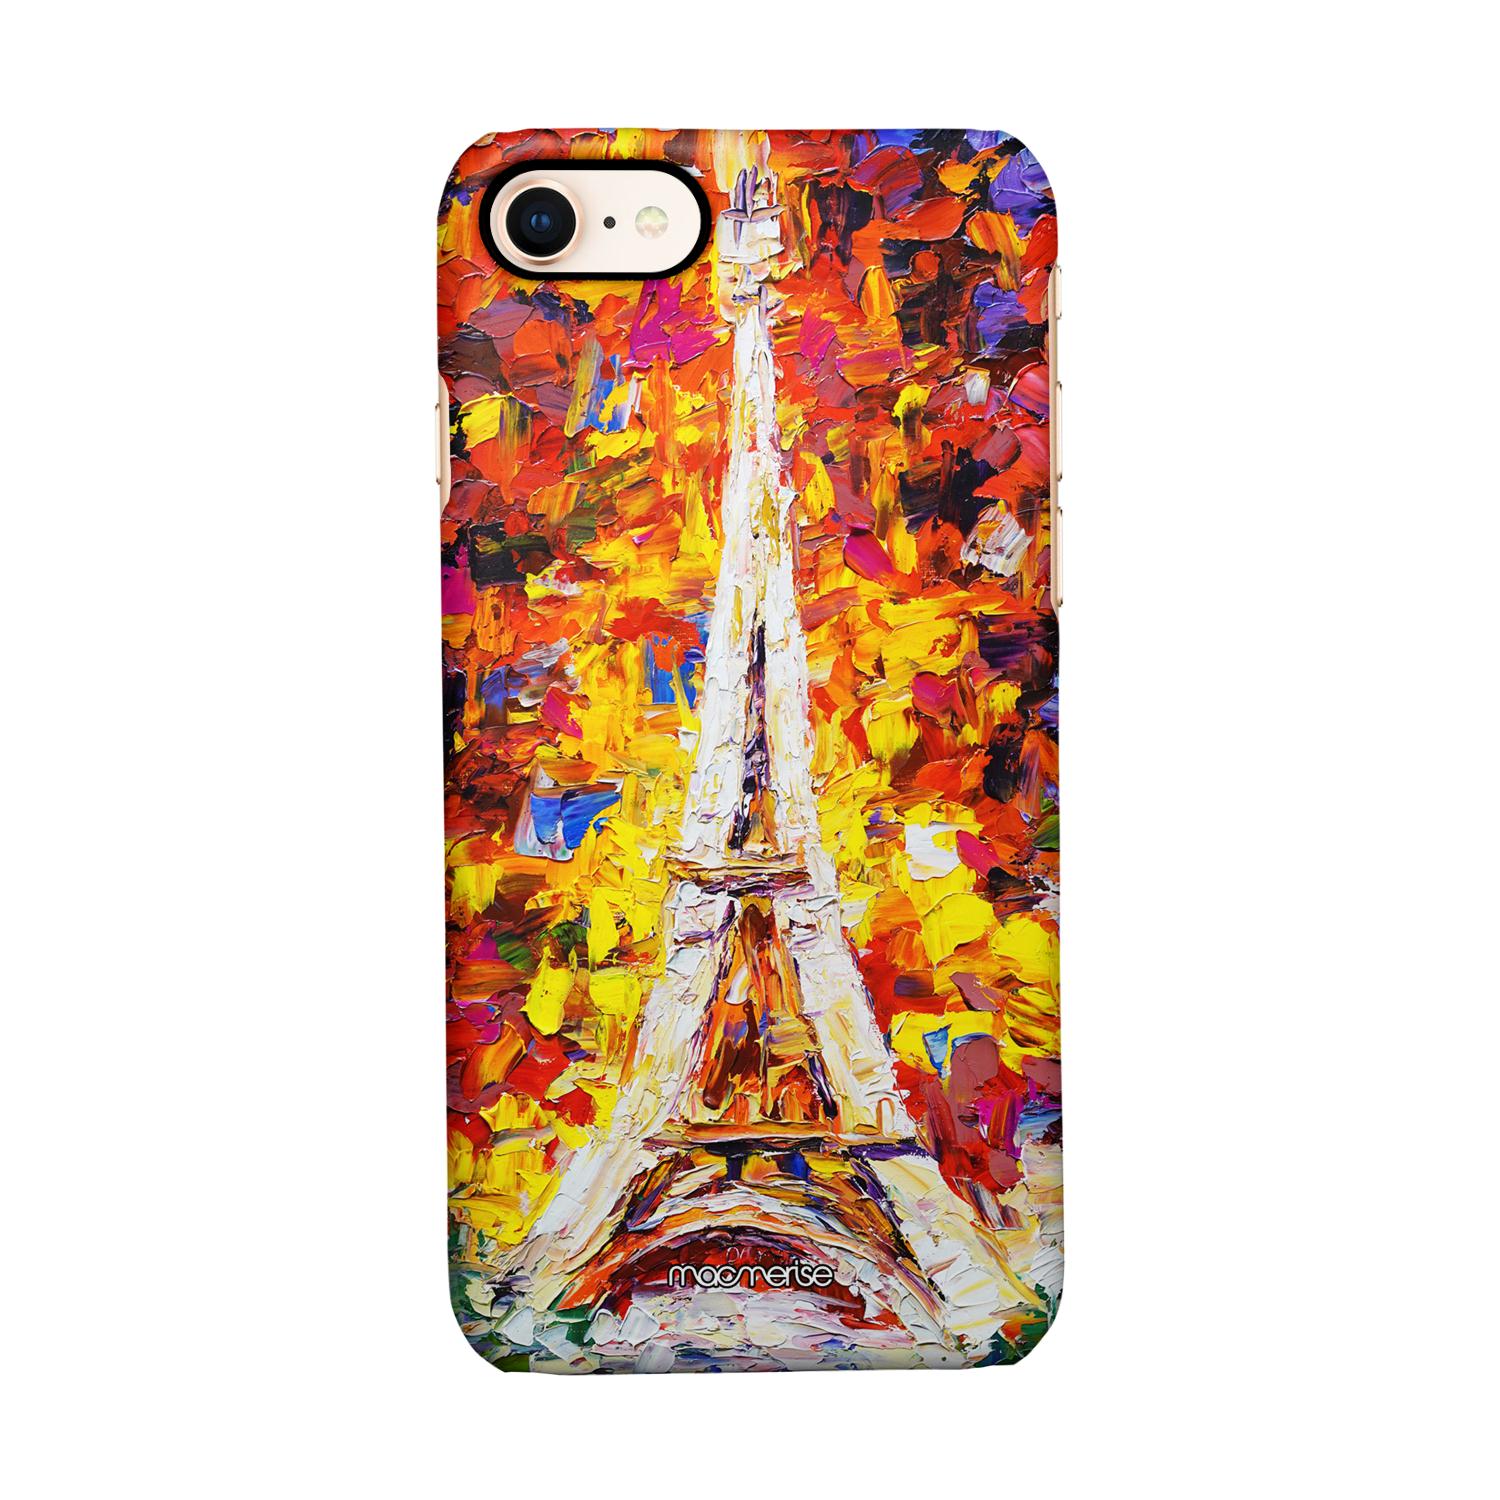 Buy Artistic Eifel - Sleek Phone Case for iPhone 8 Online